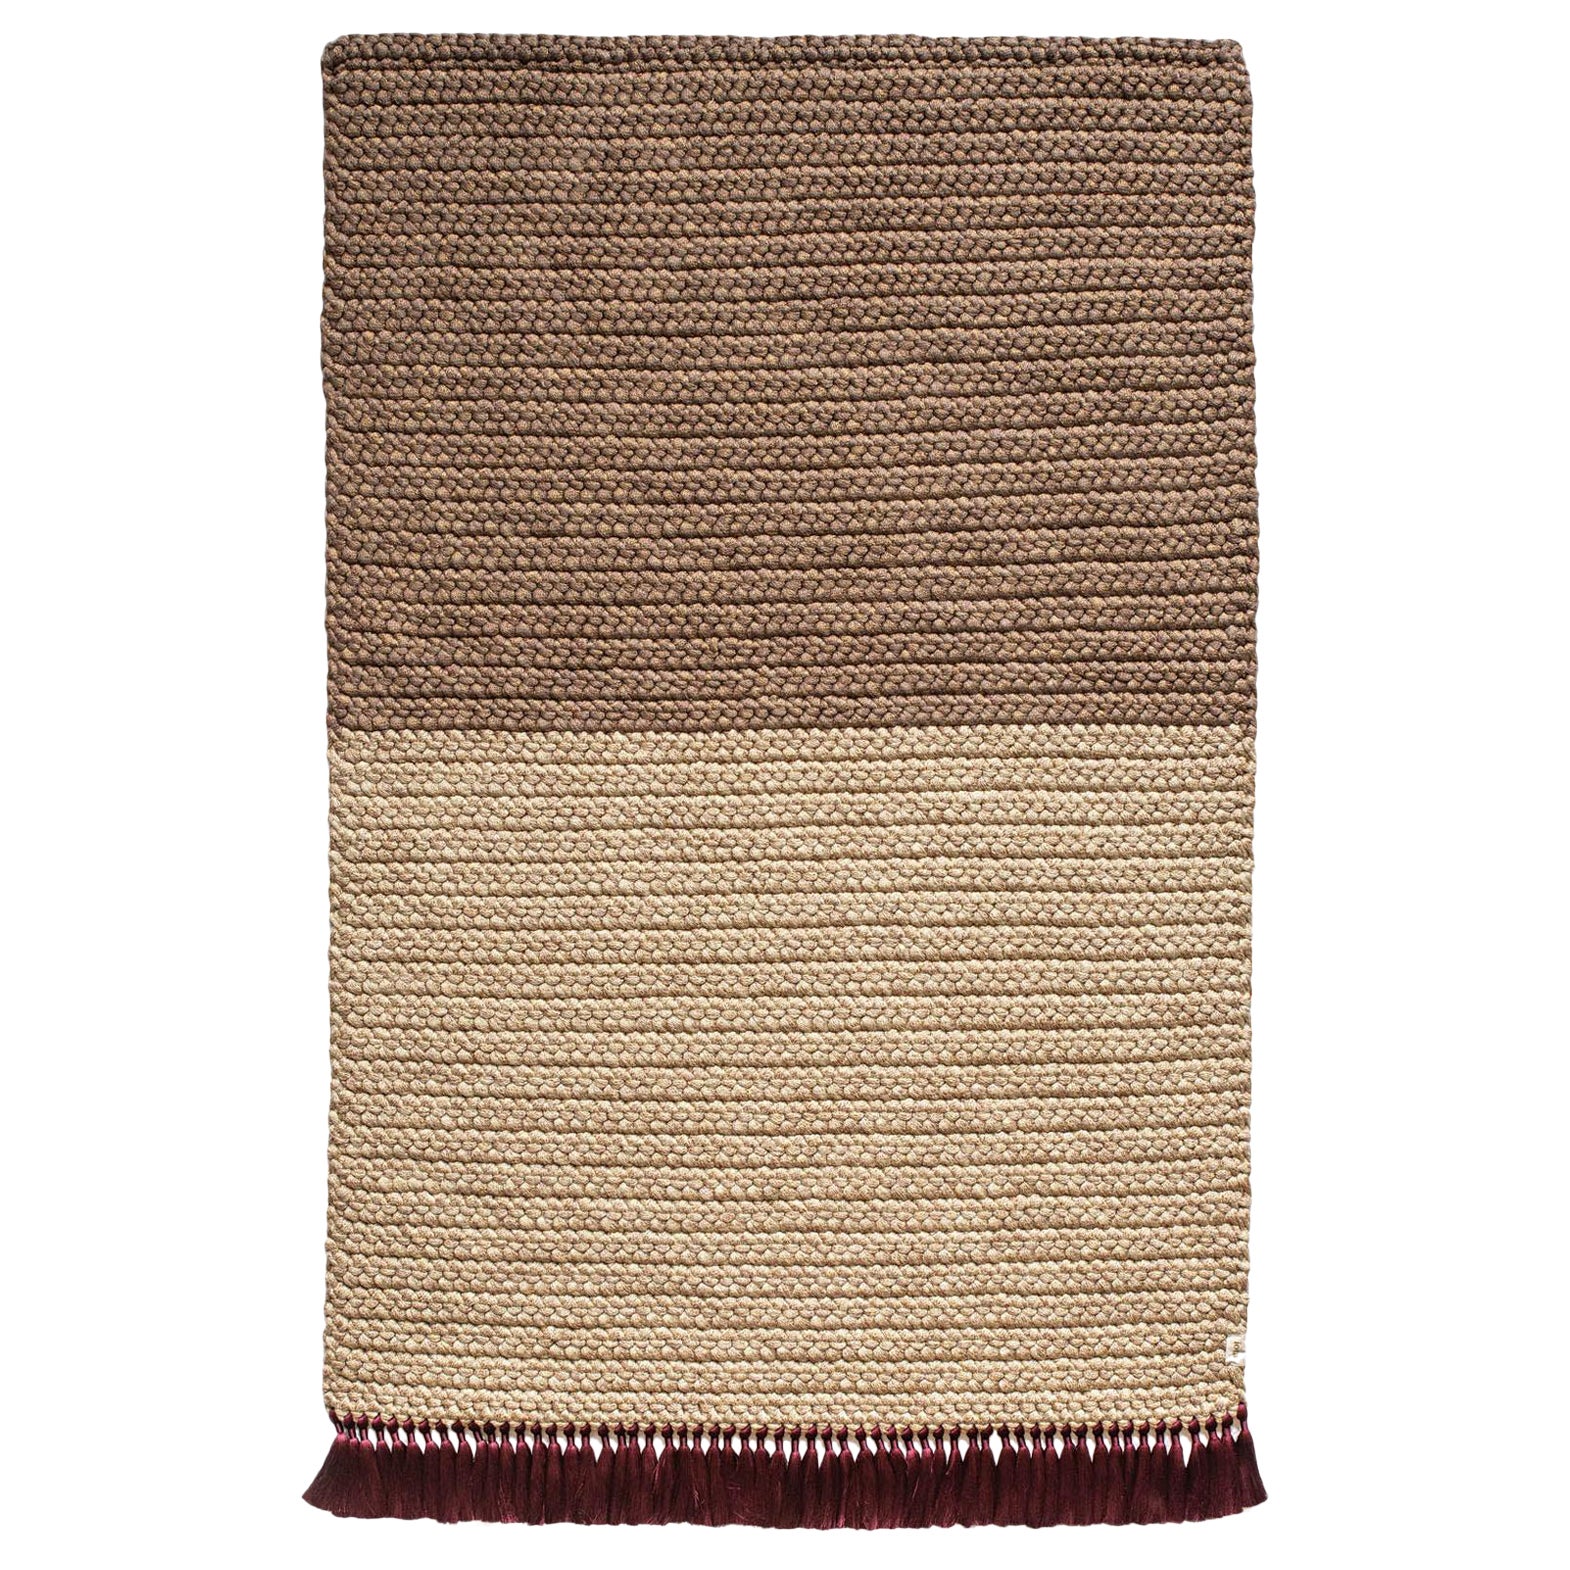 Handmade Crochet Two-Tone Rug 120x200 cm in Beige Brown Colors With Tassles